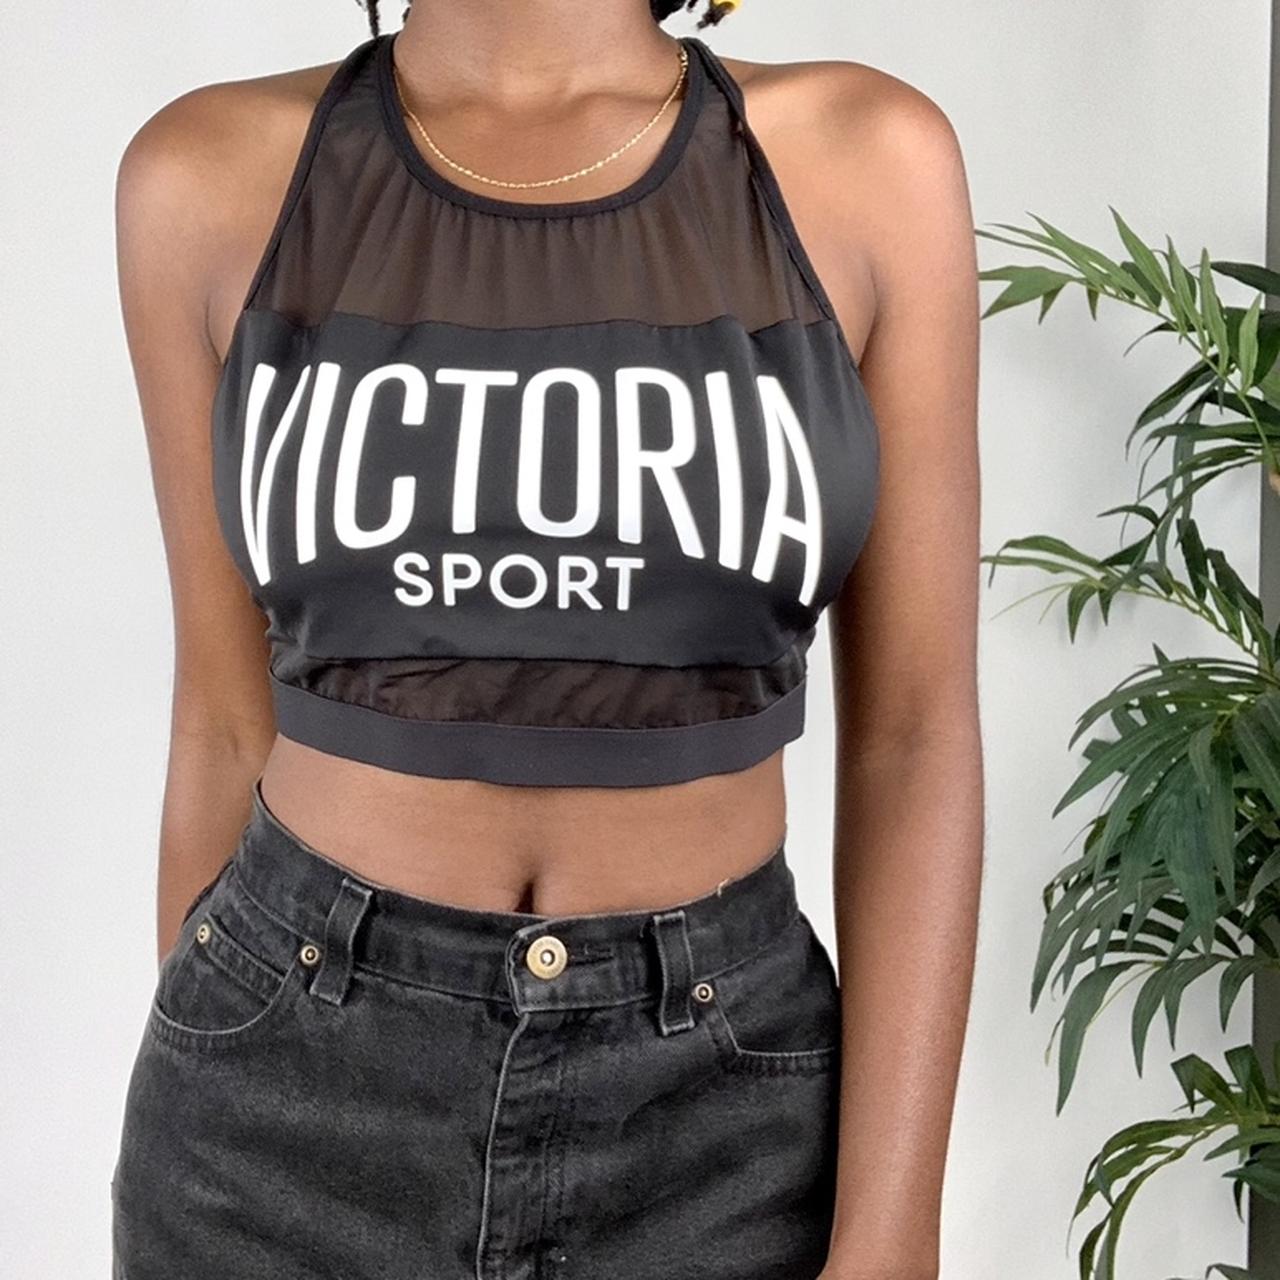 Victoria's Sport Bra size M